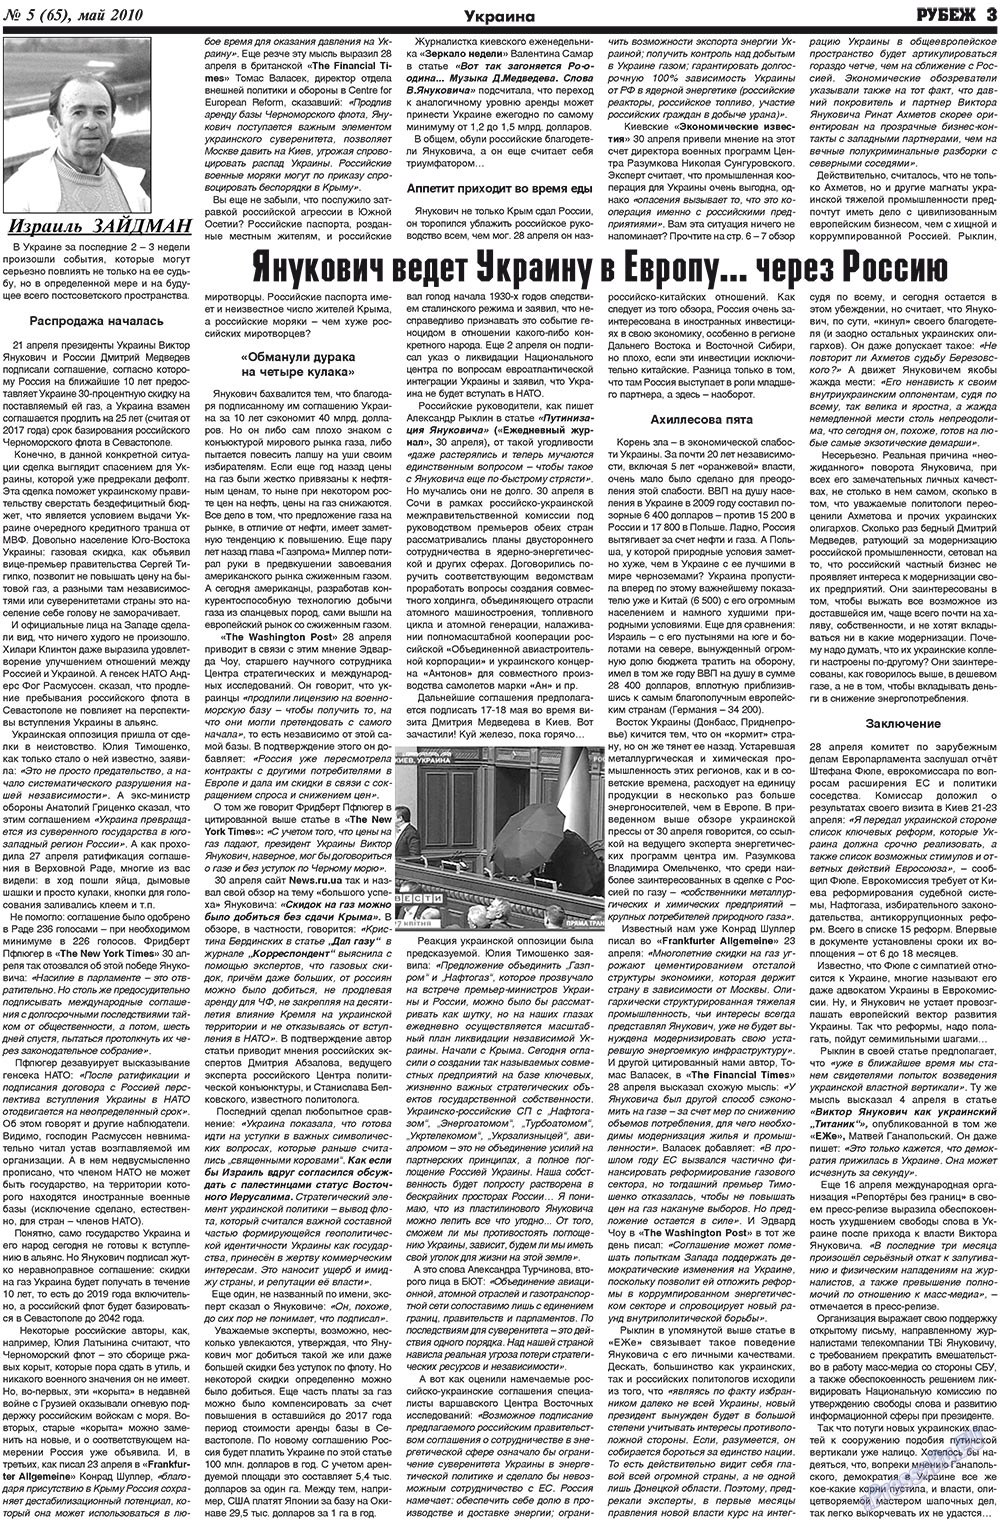 Рубеж, газета. 2010 №5 стр.3